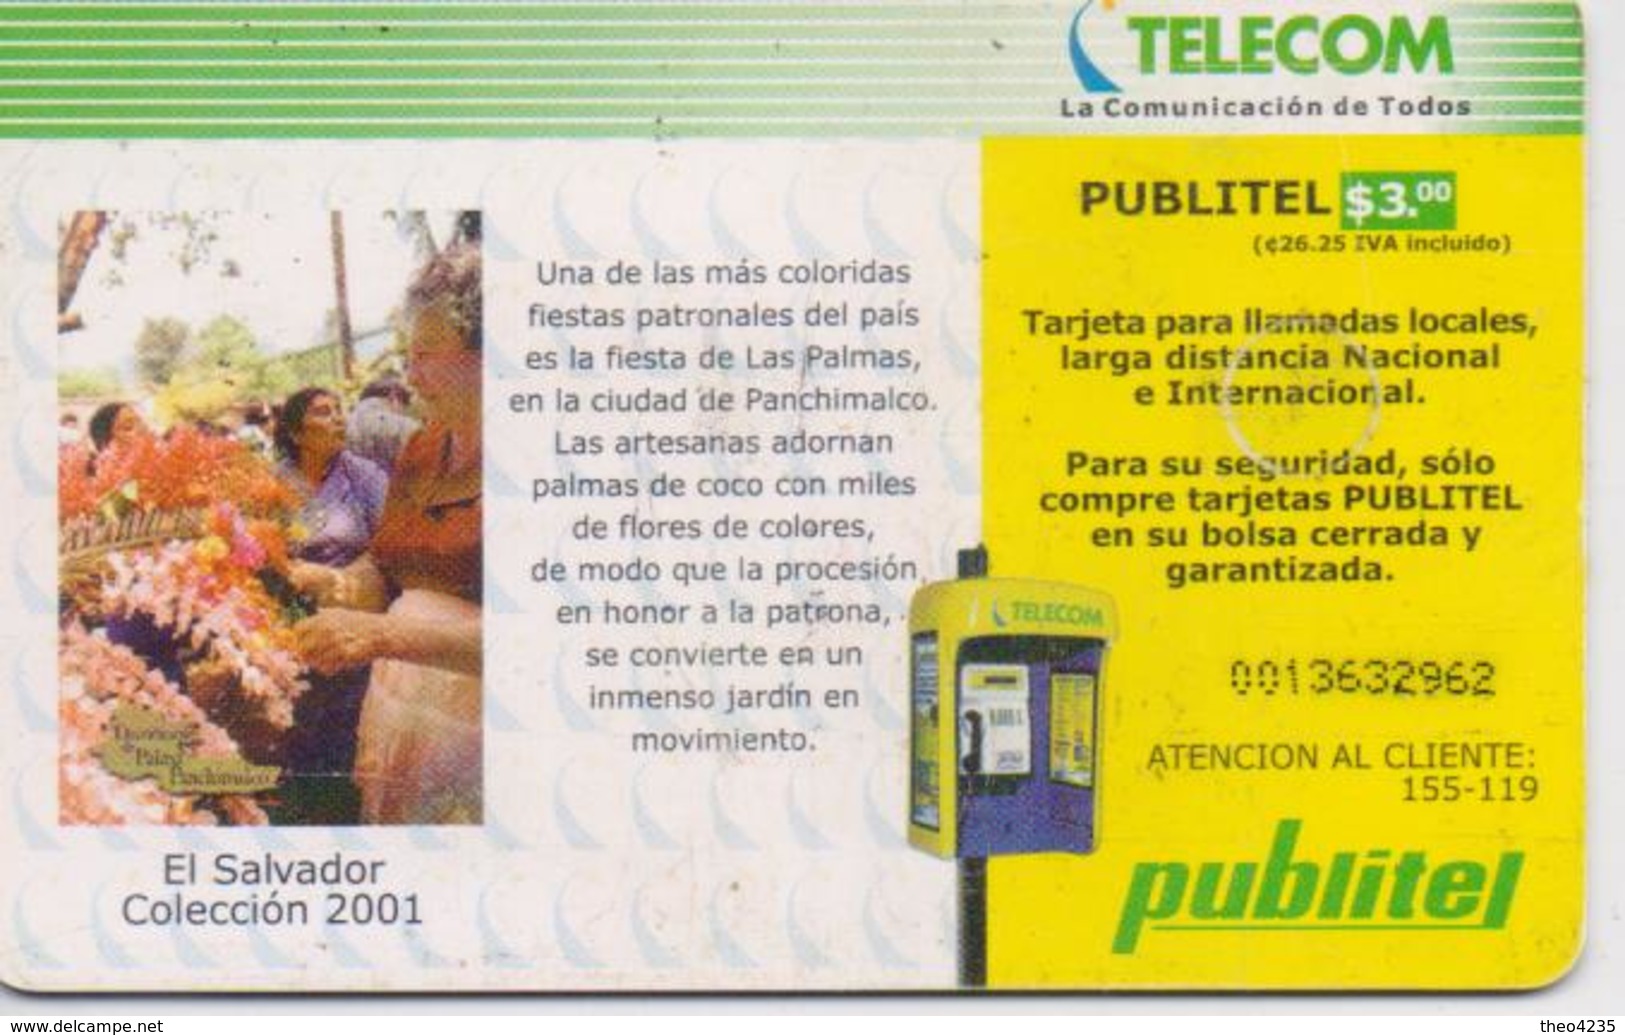 EL SALVADOR PHONECARD(CHIP) DECORATING THE PALM LEAVES 3$- 2001-USED(bx1) - El Salvador